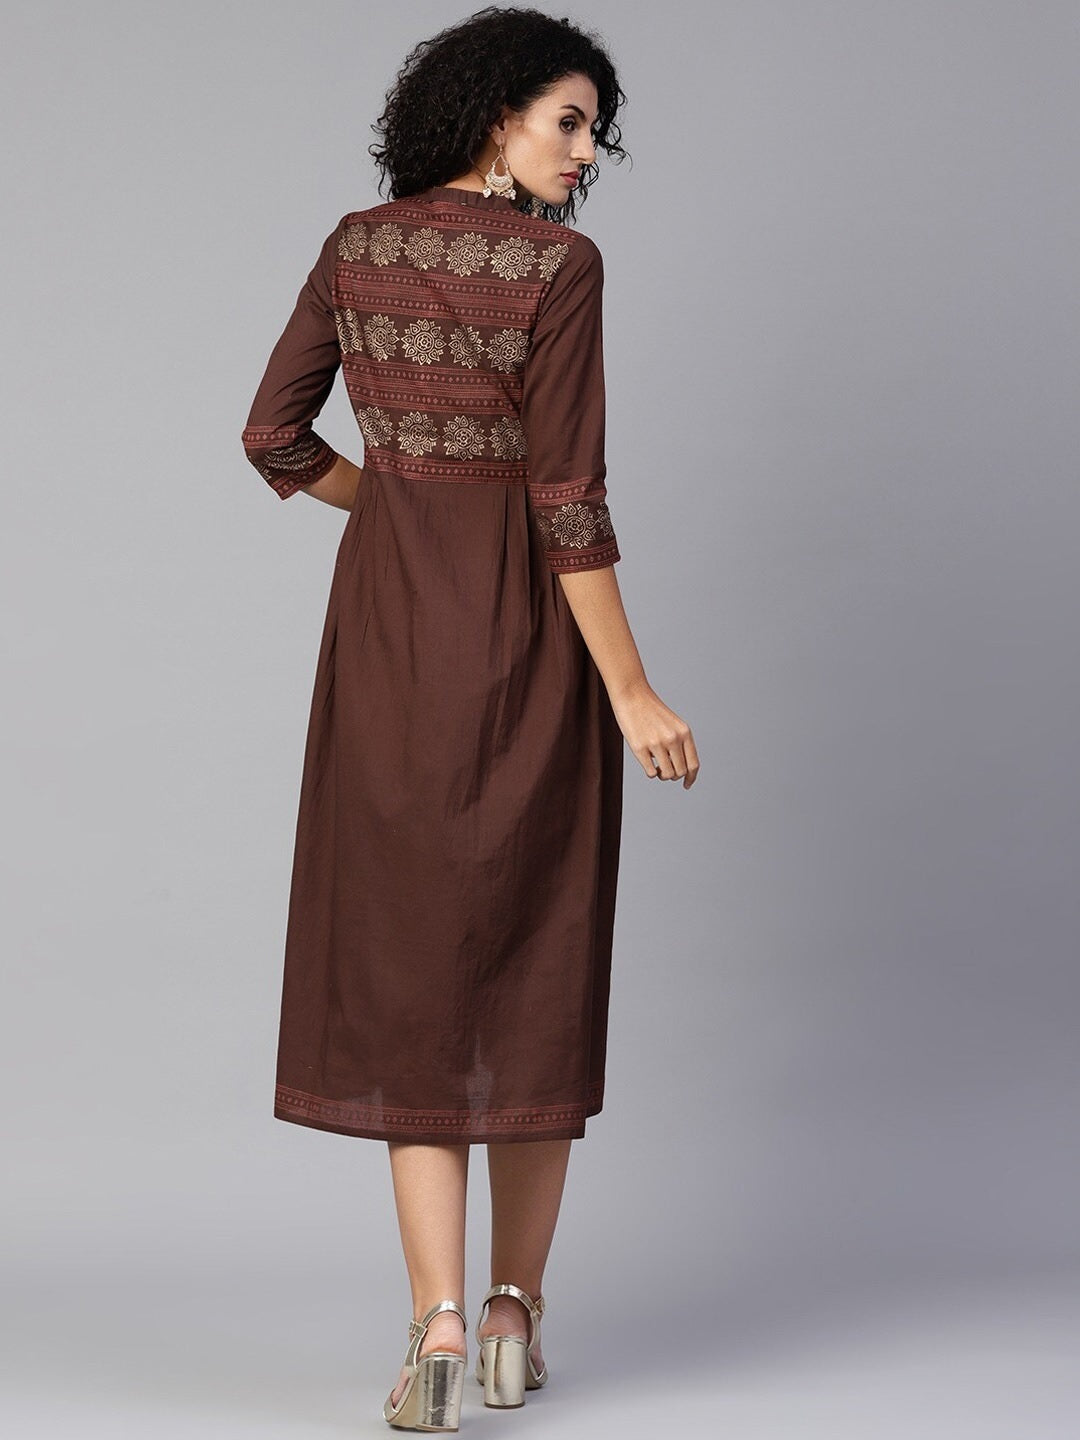 SHEIN Tall Women's Elegant Coffee Color Long Sleeve Dress | SHEIN USA